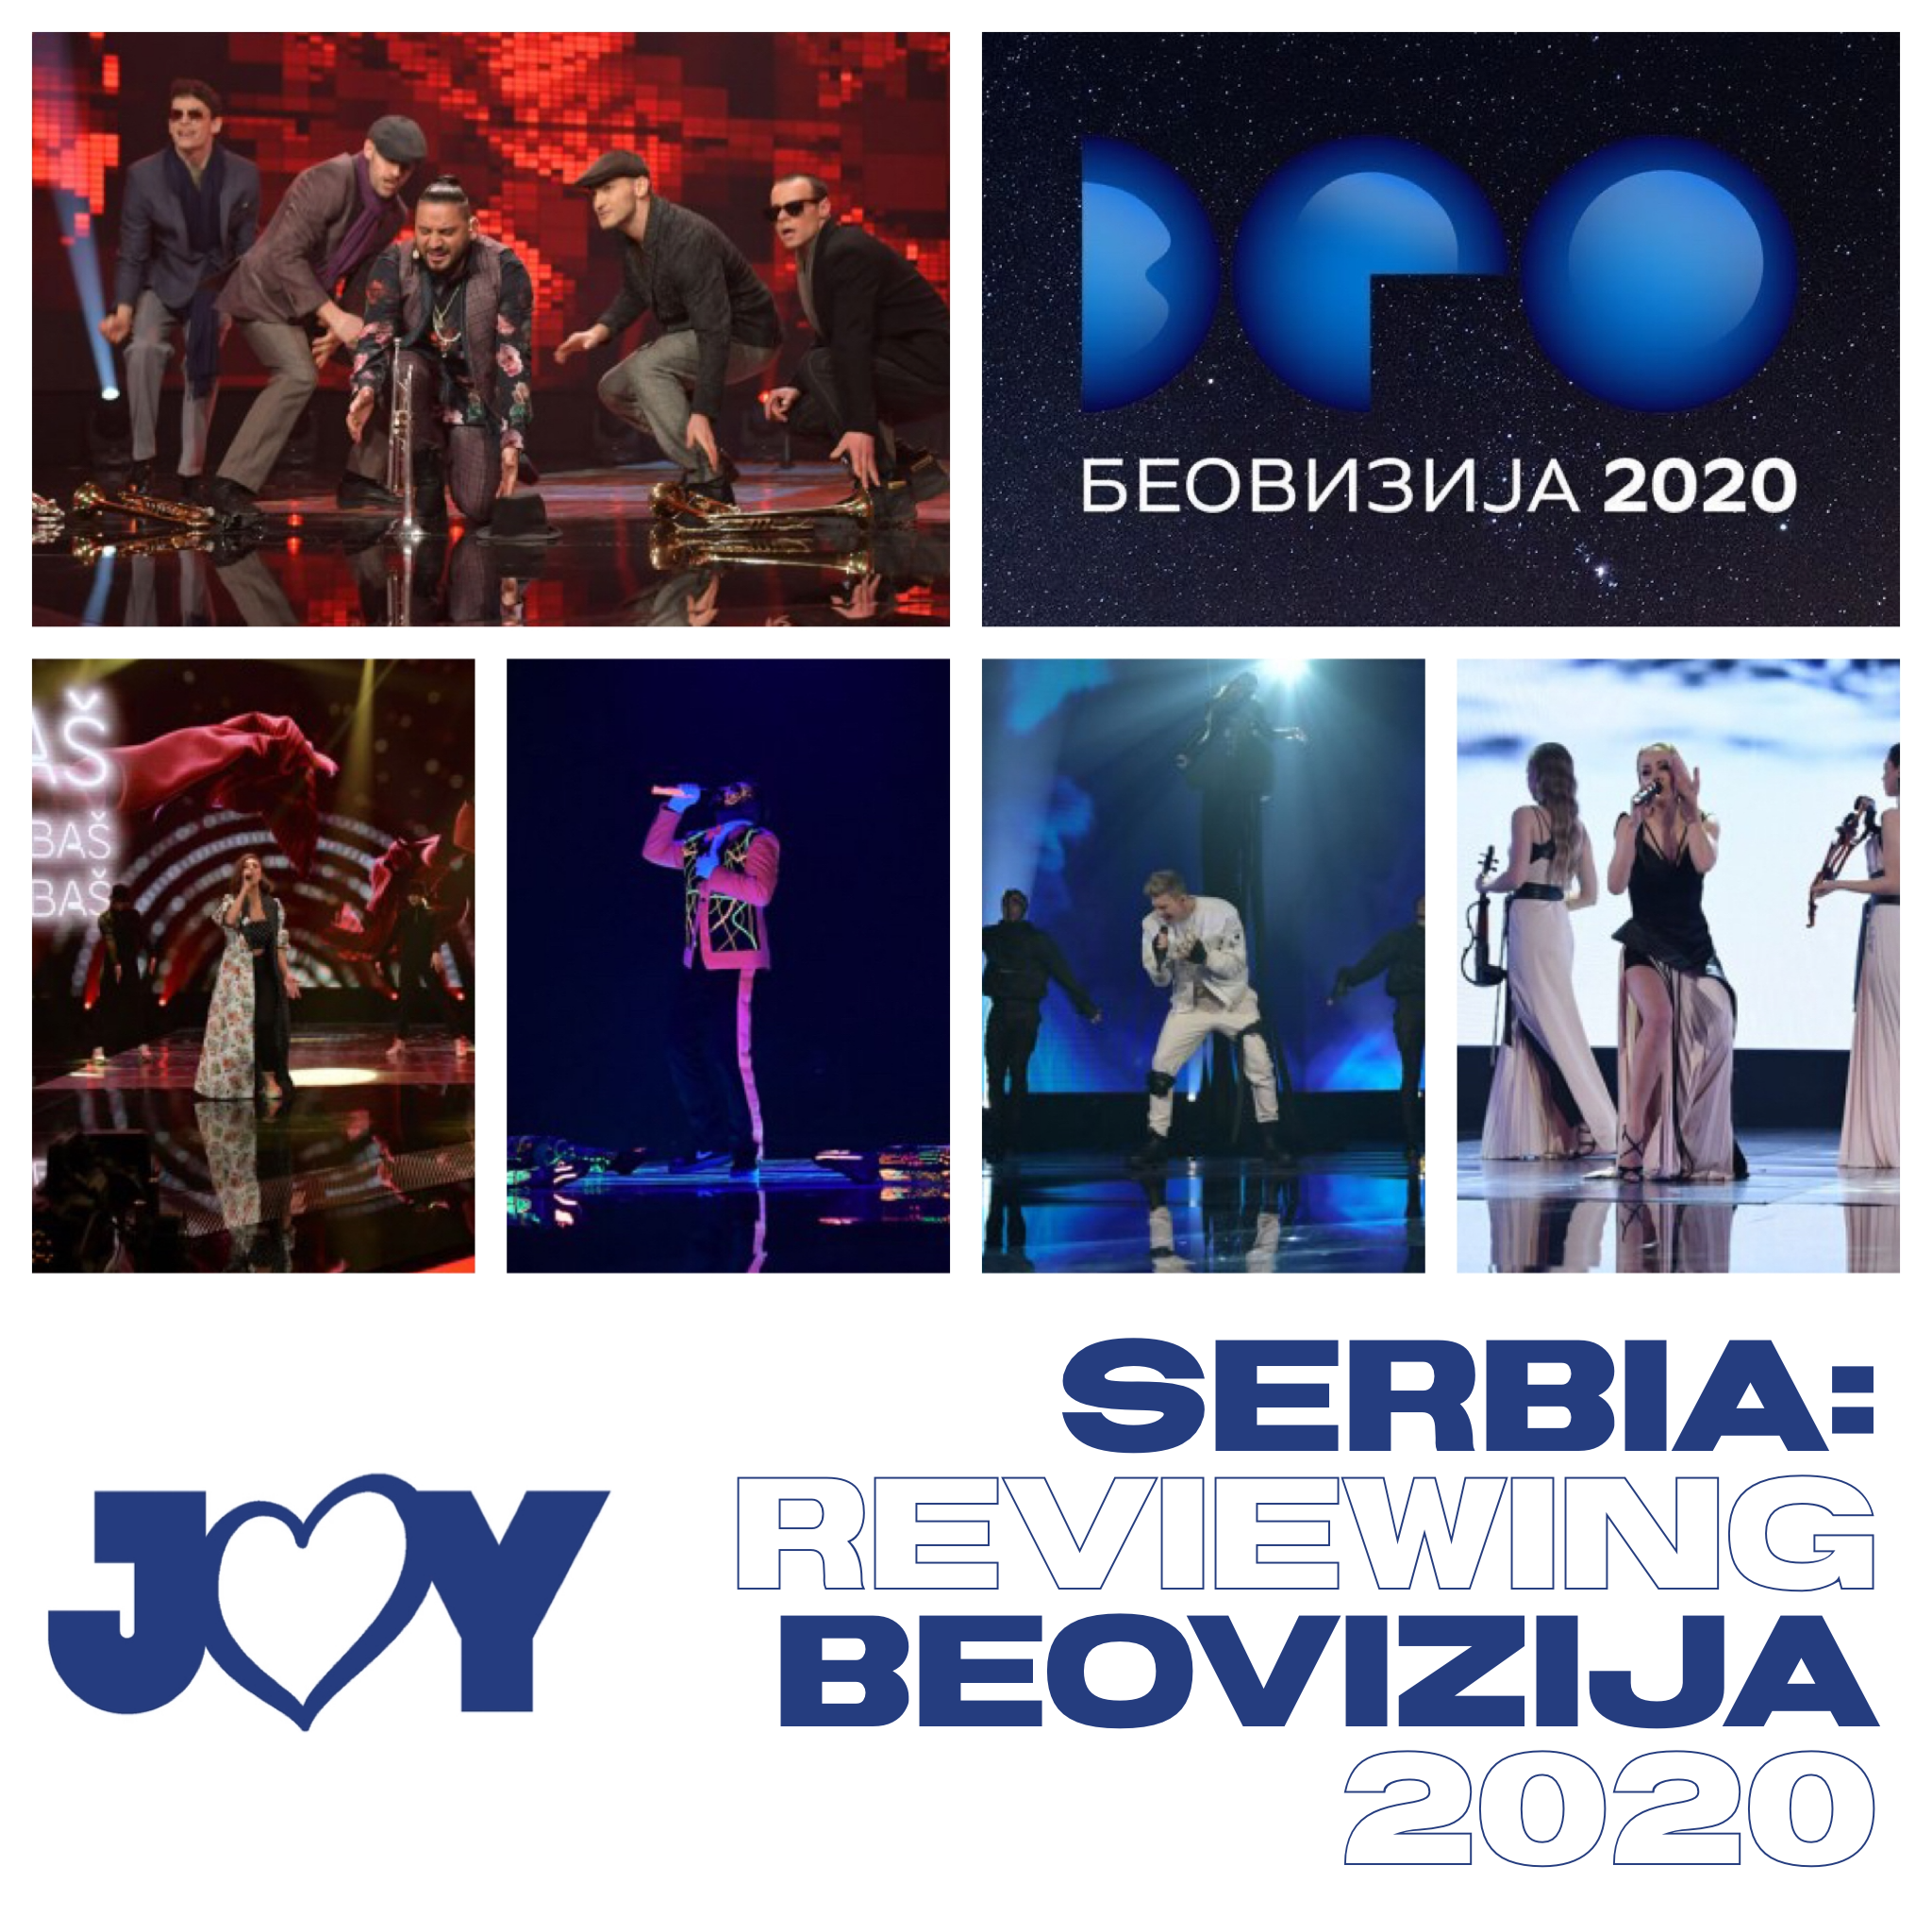 Serbia’s stuck in a hurricane: Reviewing Beovizija 2020